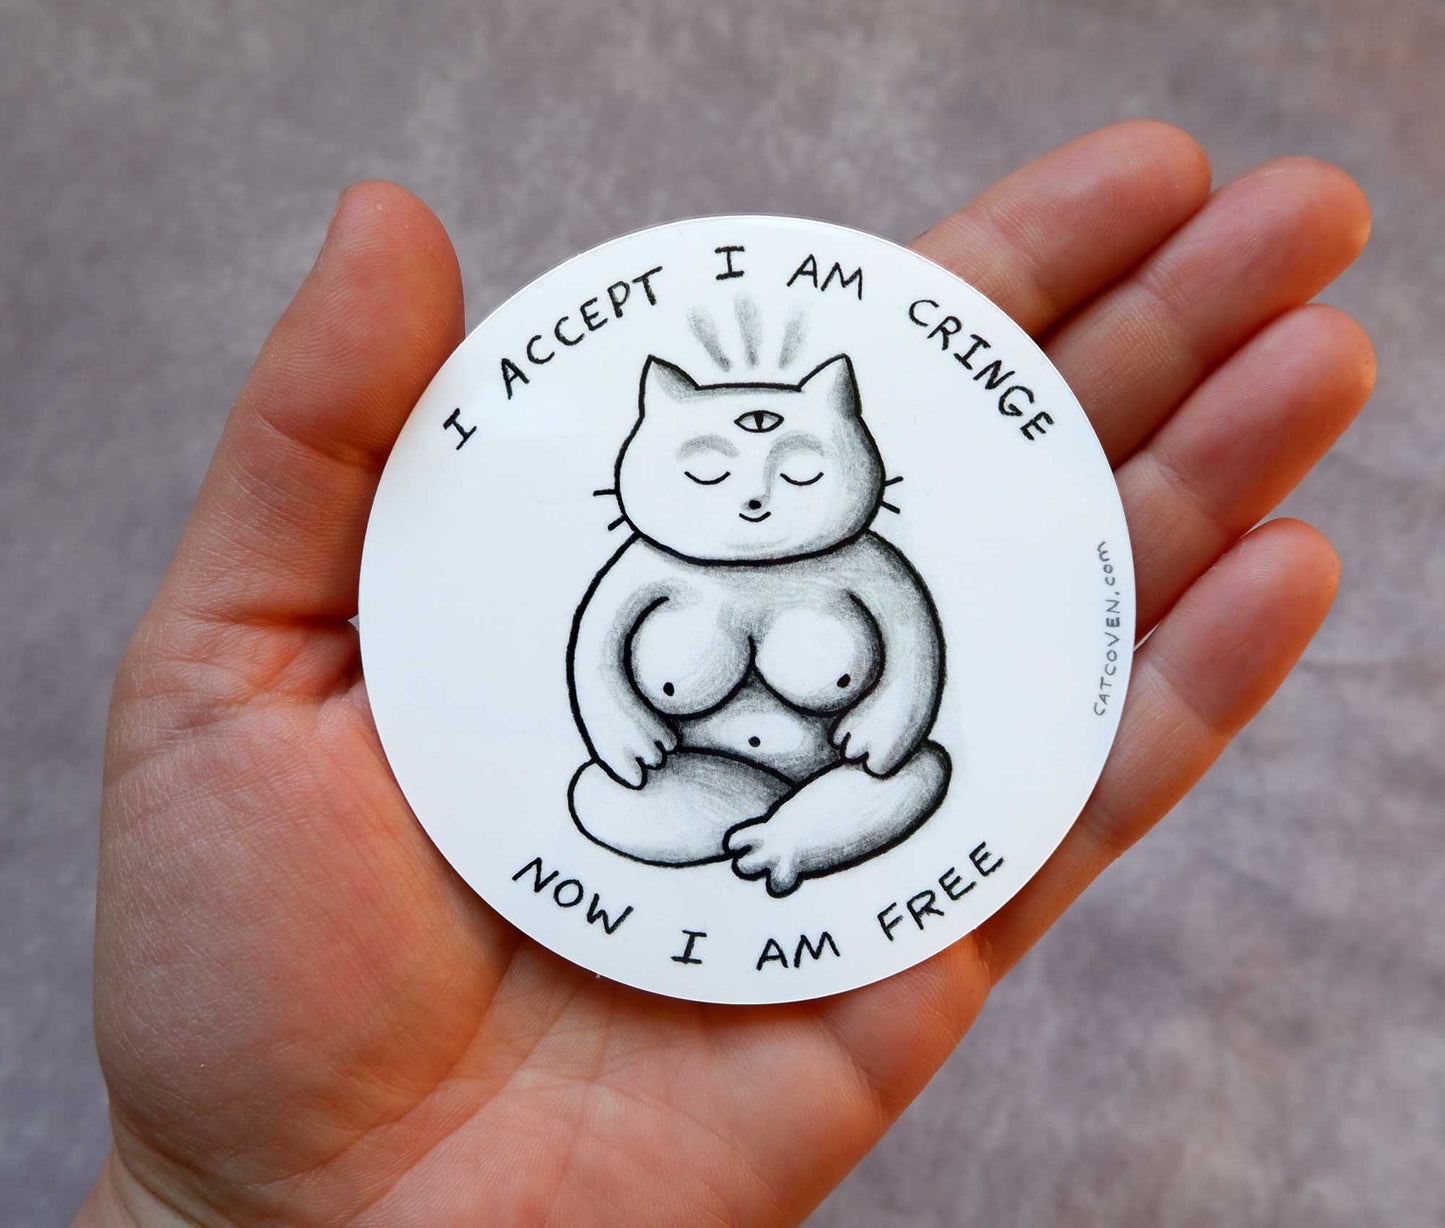 Titty Kitty (I Accept I Am Cringe) - Vinyl Sticker